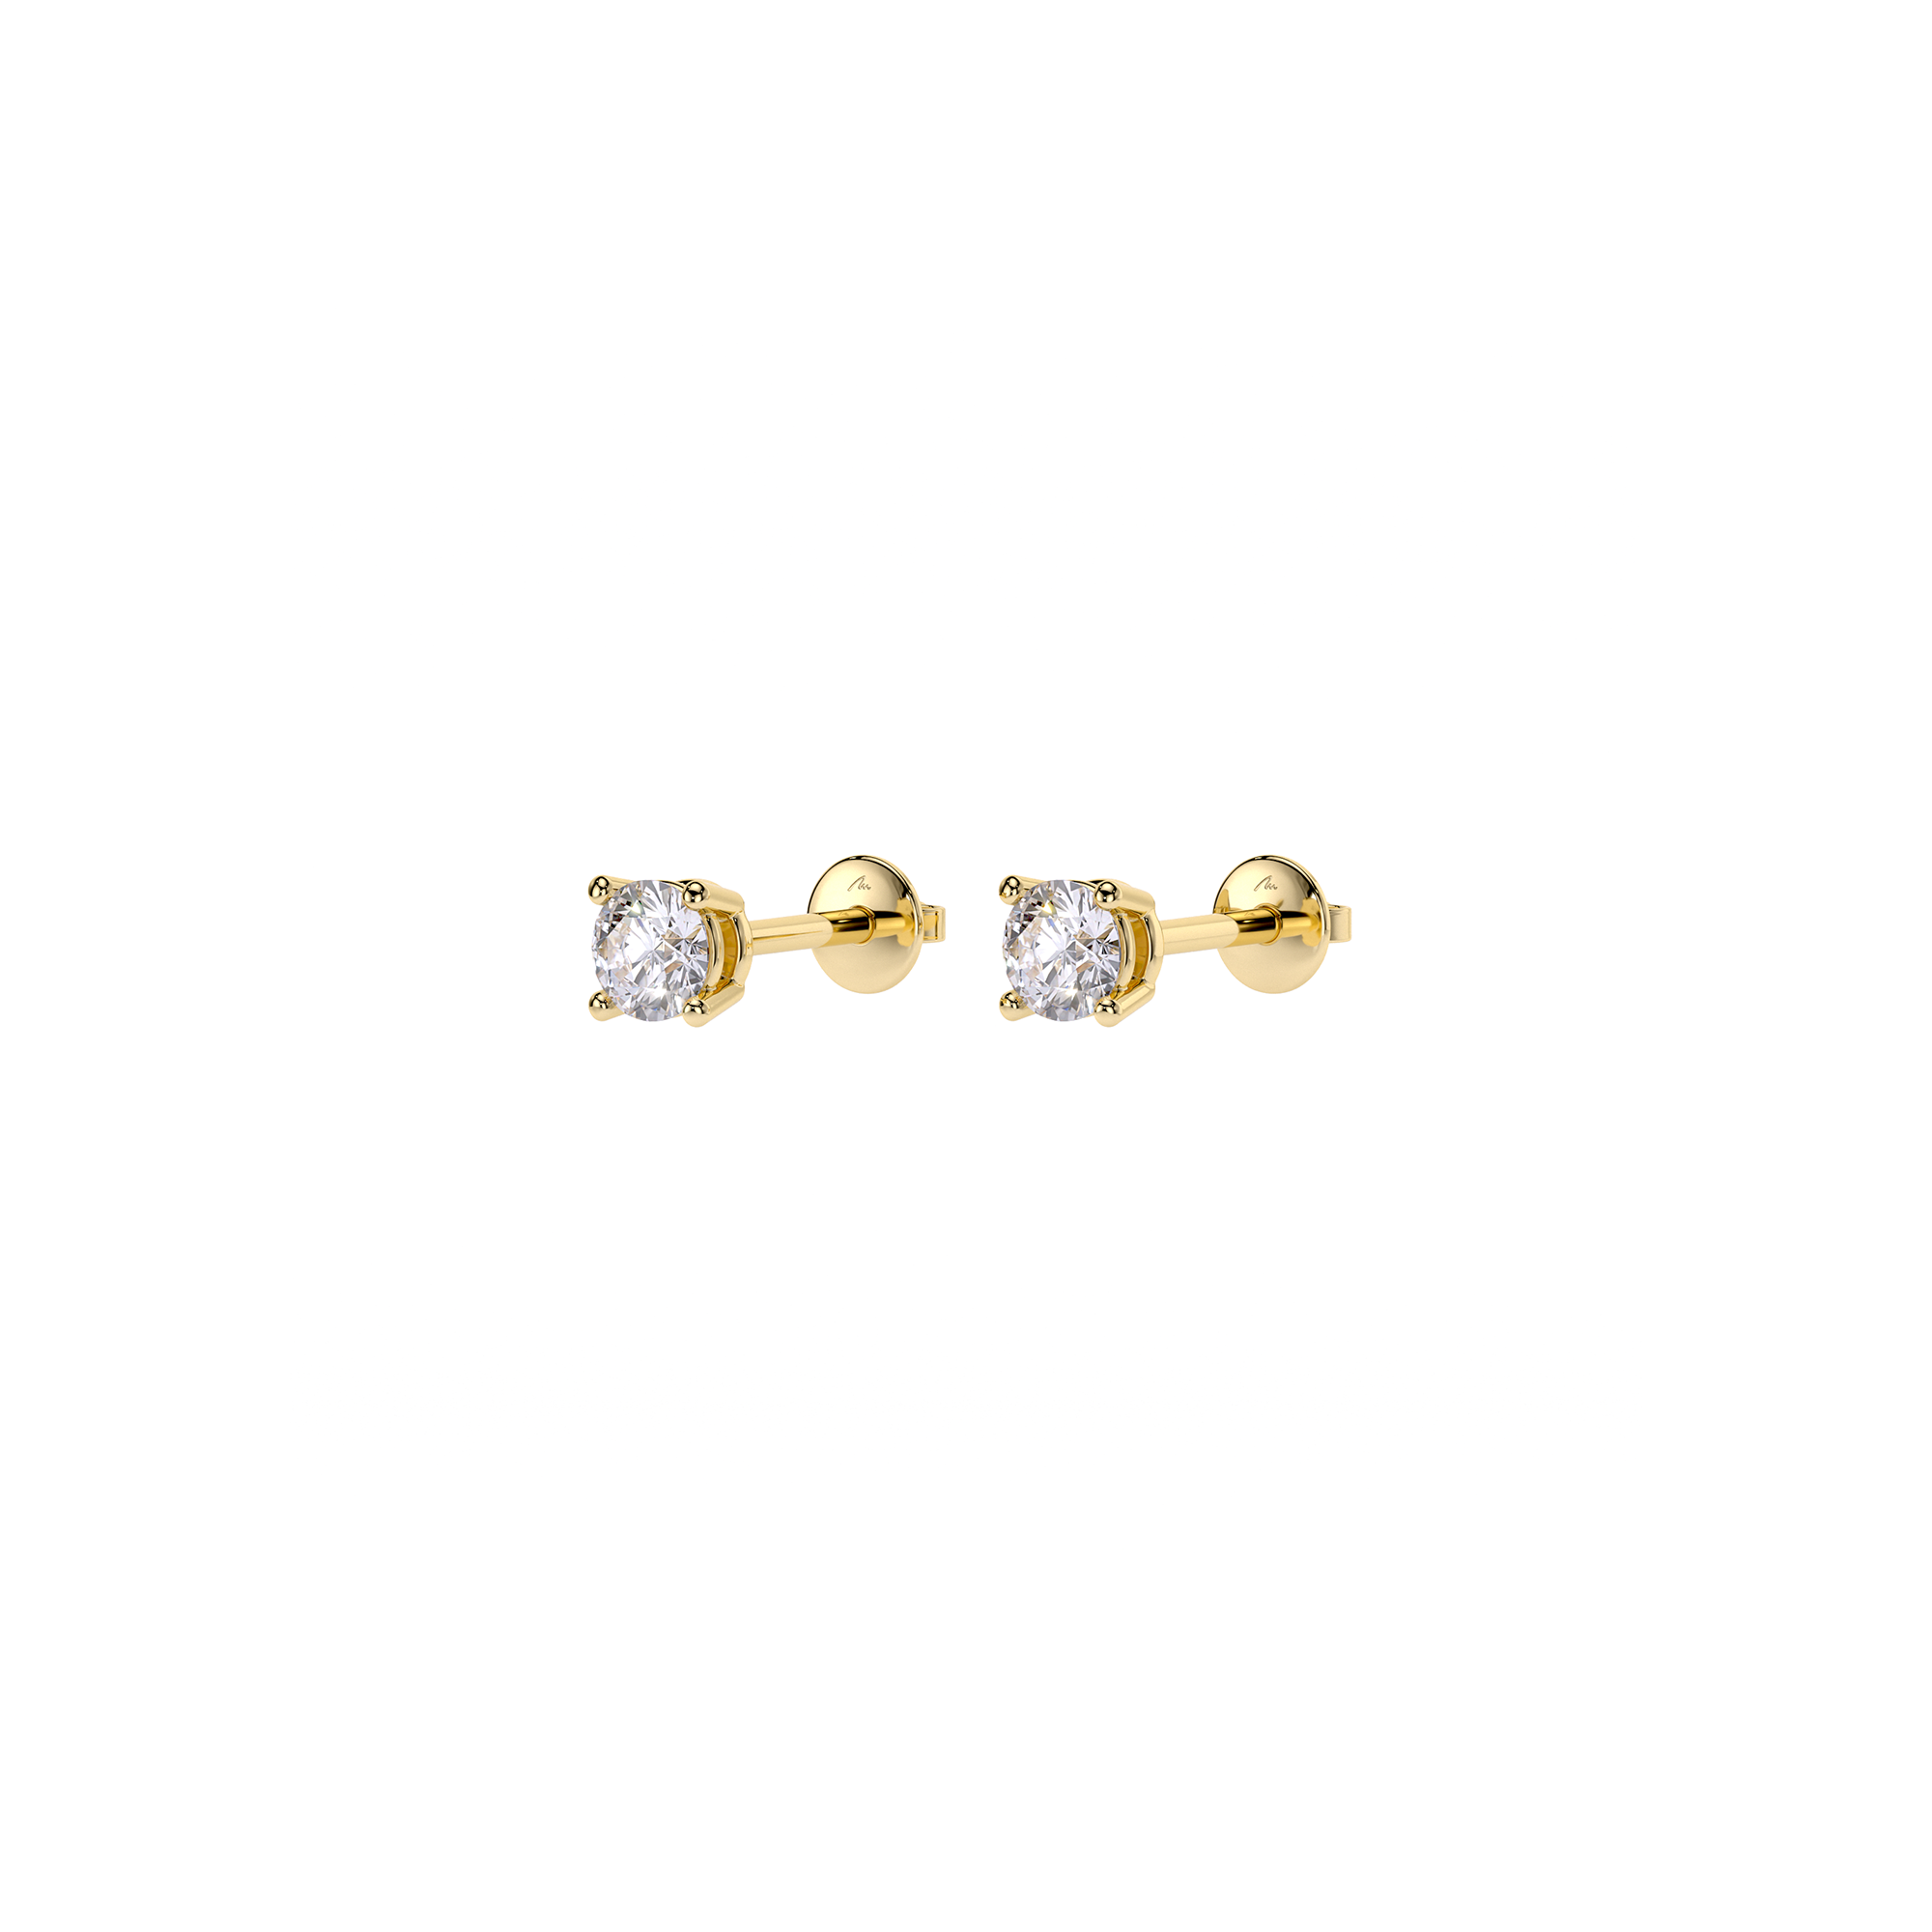 14 k yellow gold white diamonds 0.50 CT Studs earrings